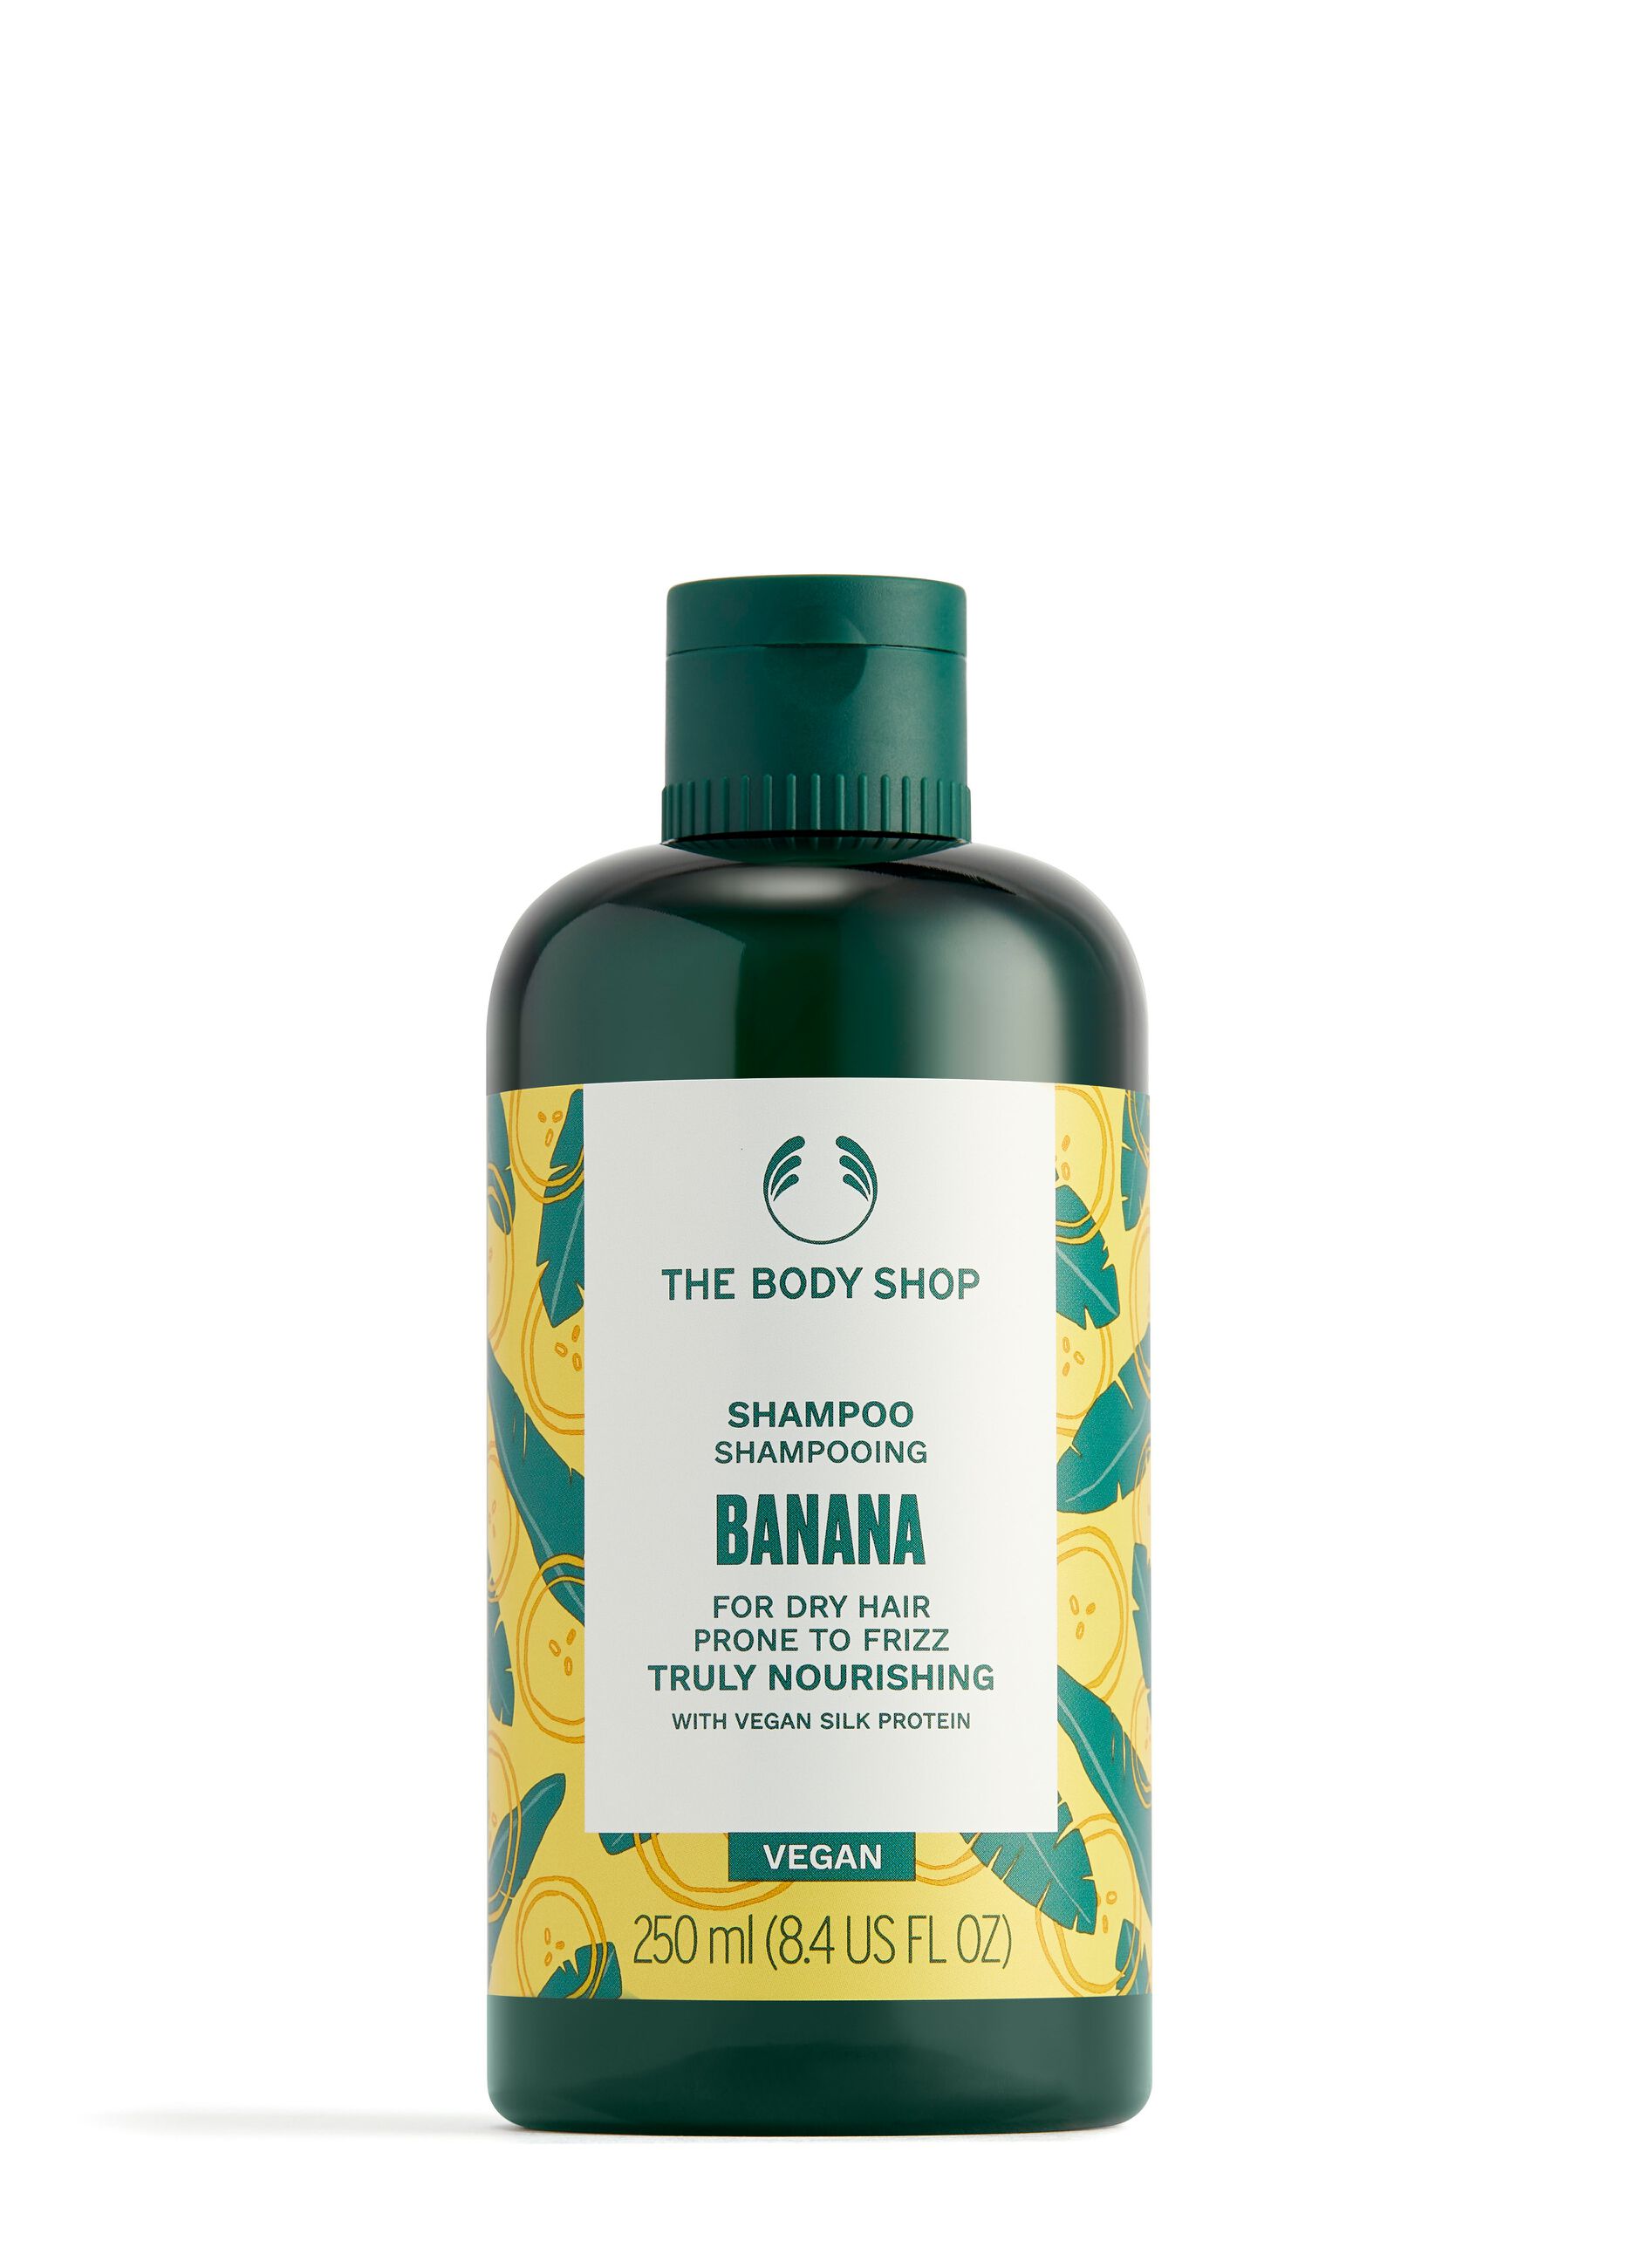 The Body Shop nourishing banana shampoo 250ml